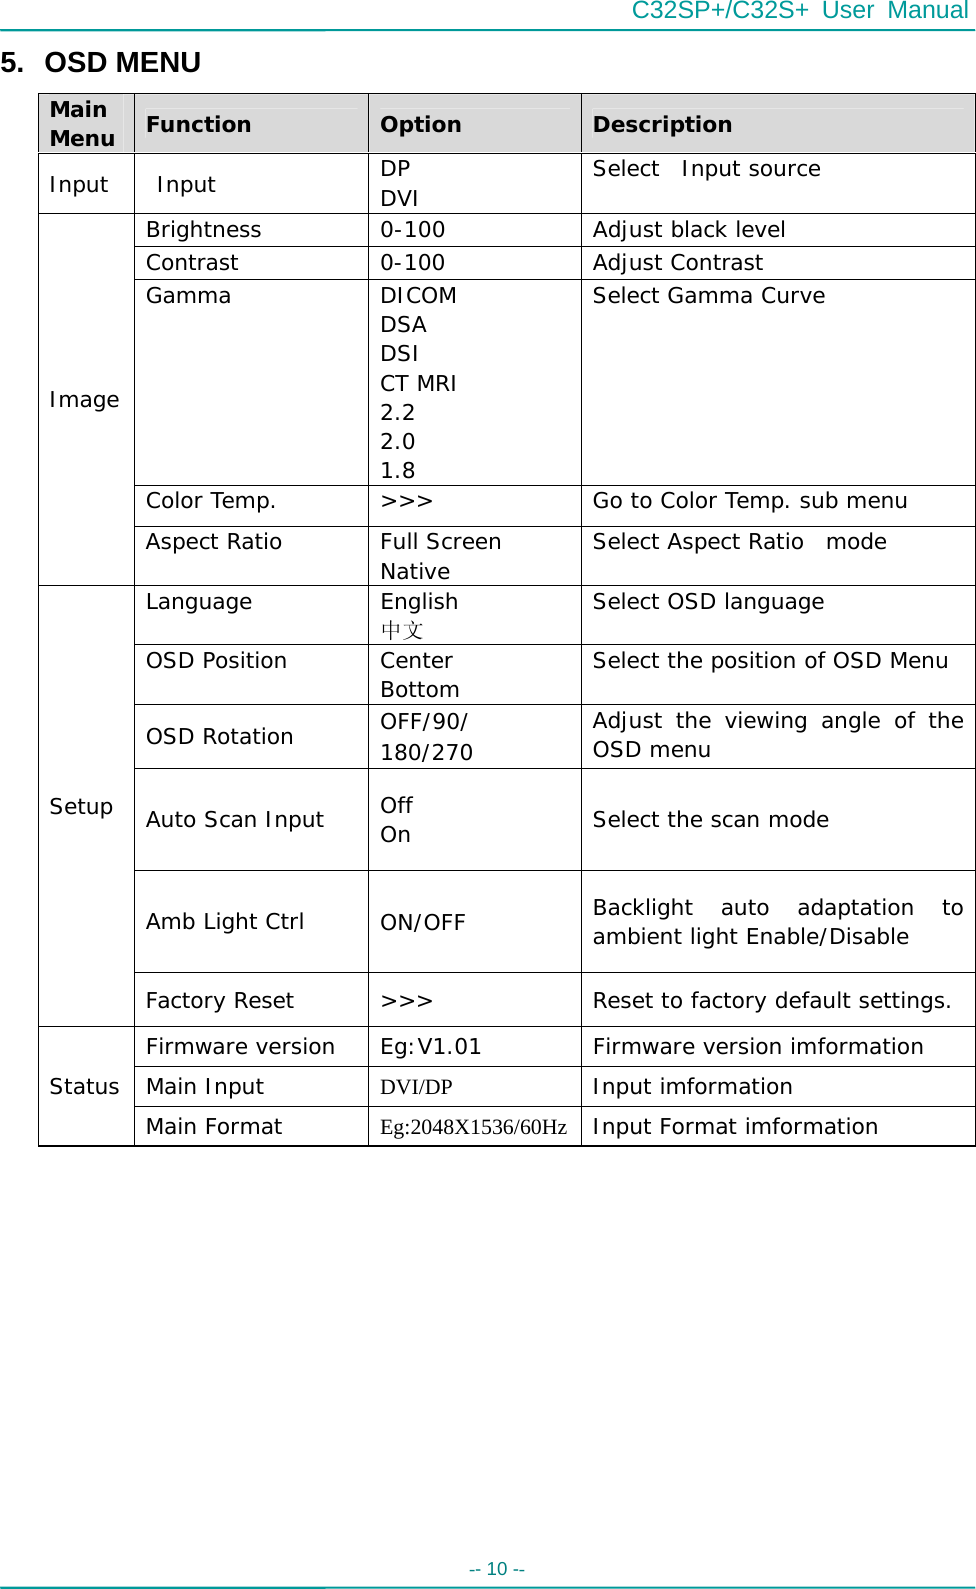 C32SP+/C32S+ User Manual -- 10 --   5. OSD MENU Main Menu  Function  Option  Description Input  Input  DP DVI  Select  Input source Brightness  0-100  Adjust black level Contrast 0-100  Adjust Contrast Gamma DICOM DSA DSI CT MRI 2.2 2.0 1.8 Select Gamma Curve Color Temp.  &gt;&gt;&gt;  Go to Color Temp. sub menu Image Aspect Ratio  Full Screen Native   Select Aspect Ratio  mode  Language English 中文 Select OSD language OSD Position  Center Bottom   Select the position of OSD Menu OSD Rotation  OFF/90/ 180/270  Adjust the viewing angle of the OSD menu Auto Scan Input  Off On  Select the scan mode Amb Light Ctrl  ON/OFF  Backlight auto adaptation to ambient light Enable/Disable Setup Factory Reset  &gt;&gt;&gt;  Reset to factory default settings. Firmware version  Eg:V1.01  Firmware version imformation Main Input DVI/DP  Input imformation Status Main Format Eg:2048X1536/60Hz Input Format imformation              